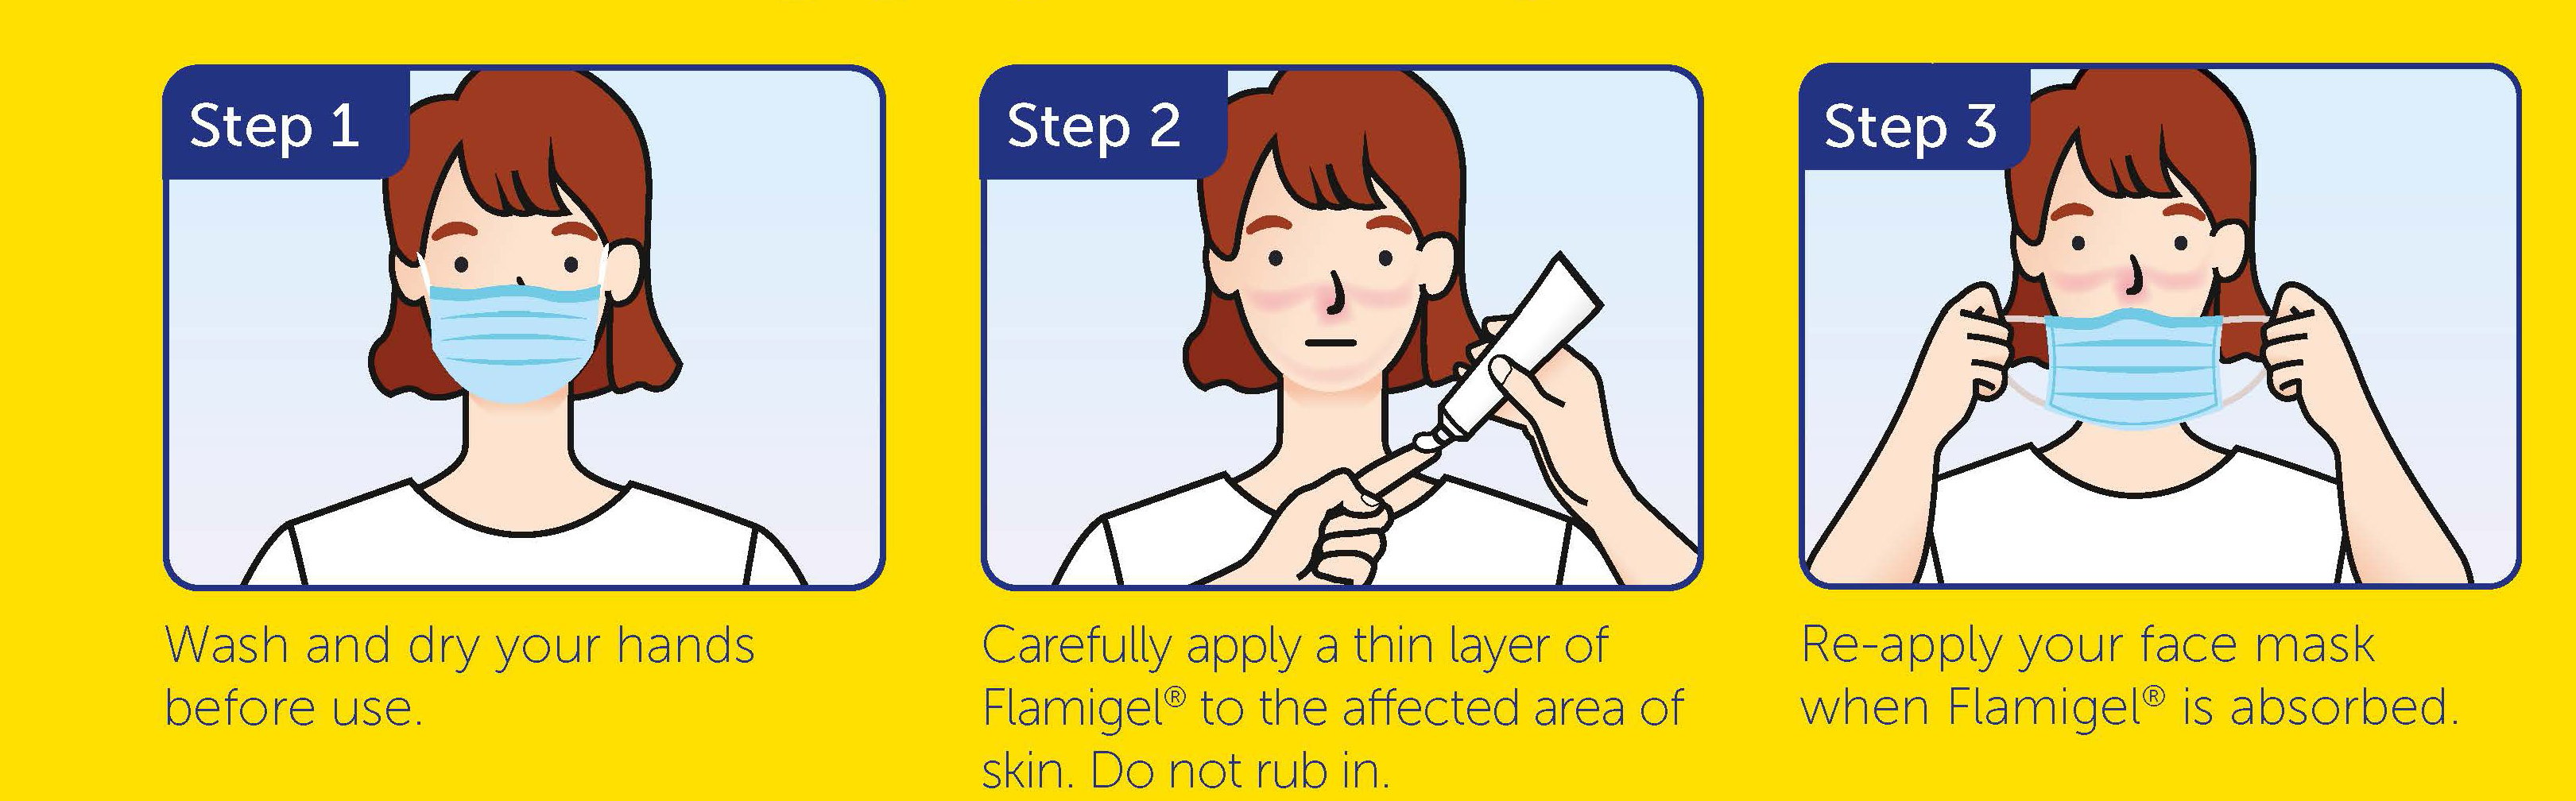 how to apply flamigel.jpg